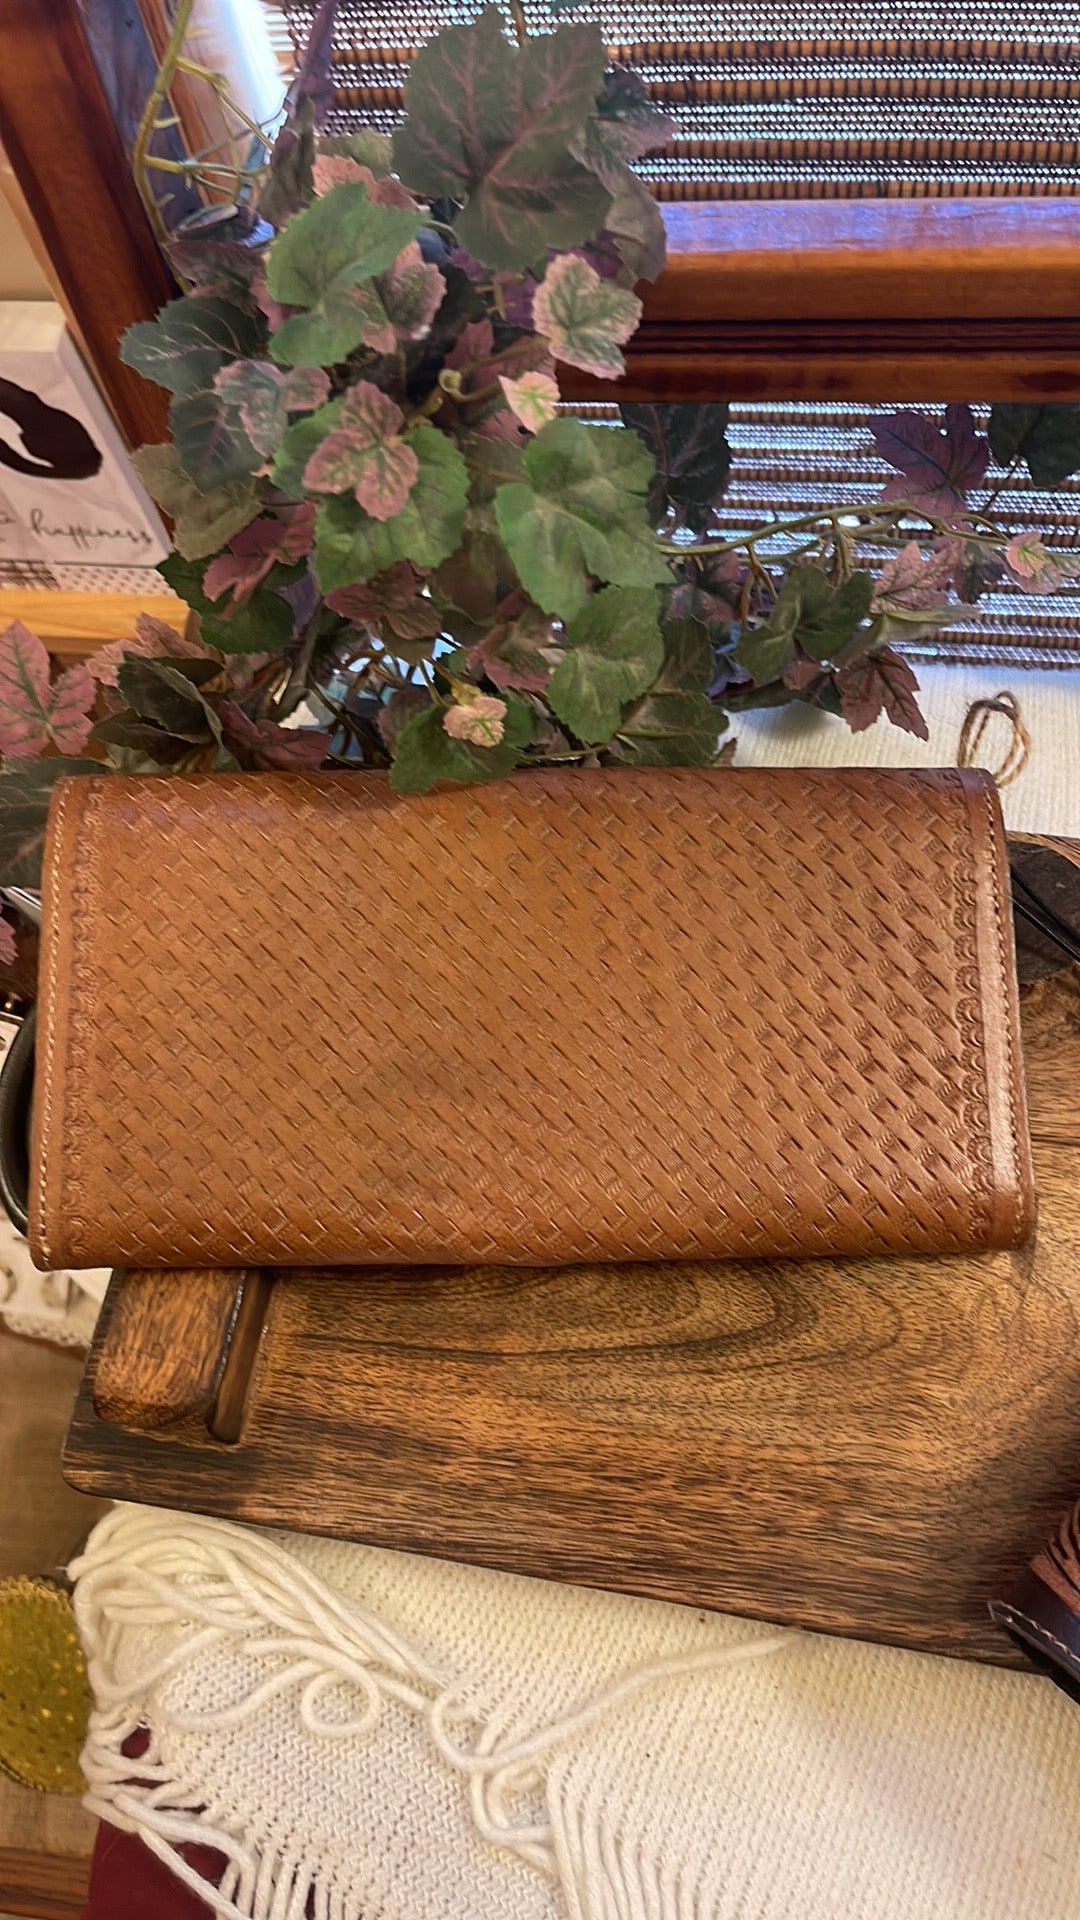 Myra Bag Genuine Tooled Leather Wallet